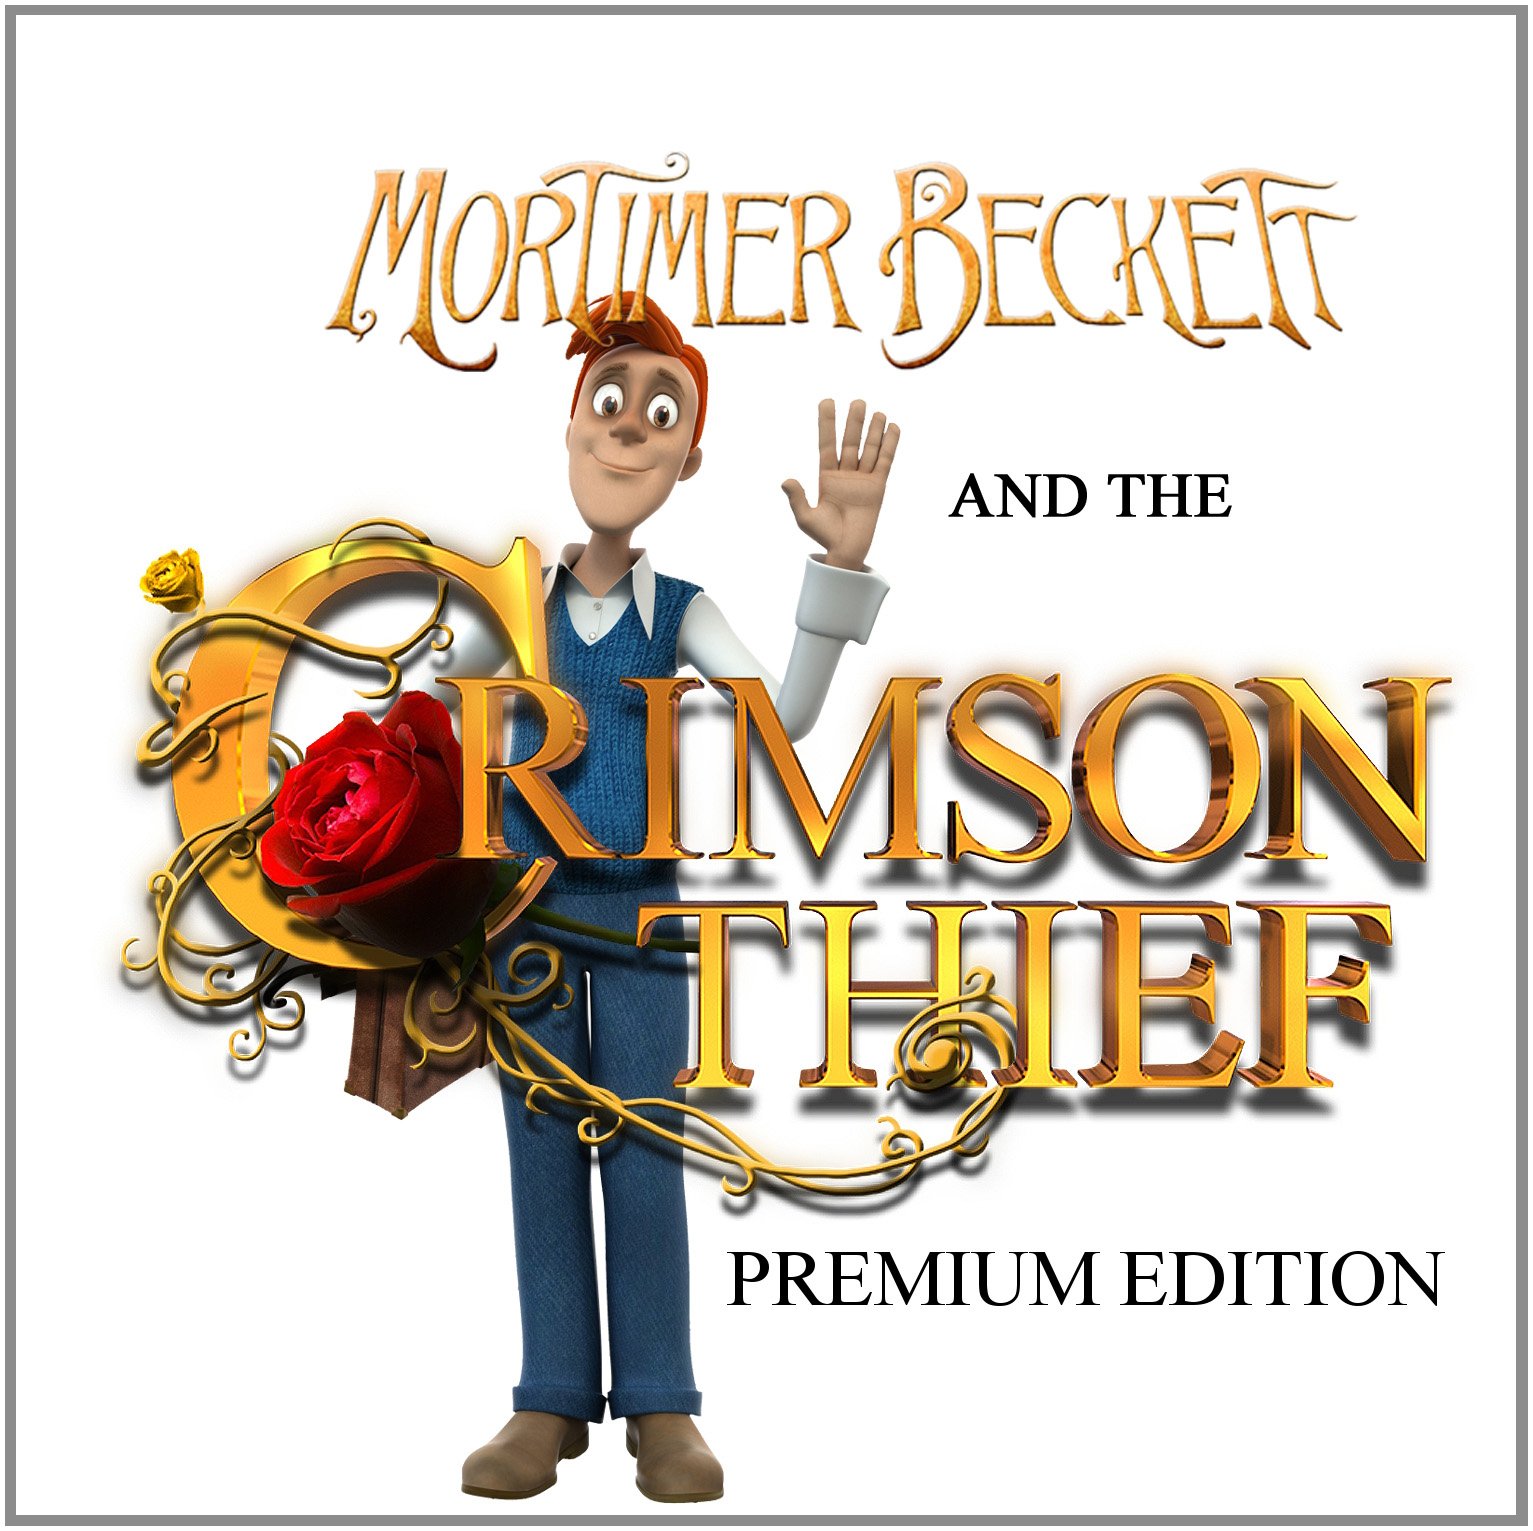 Mortimer Beckett and The Crimson Thief - Premium Edition [Download]